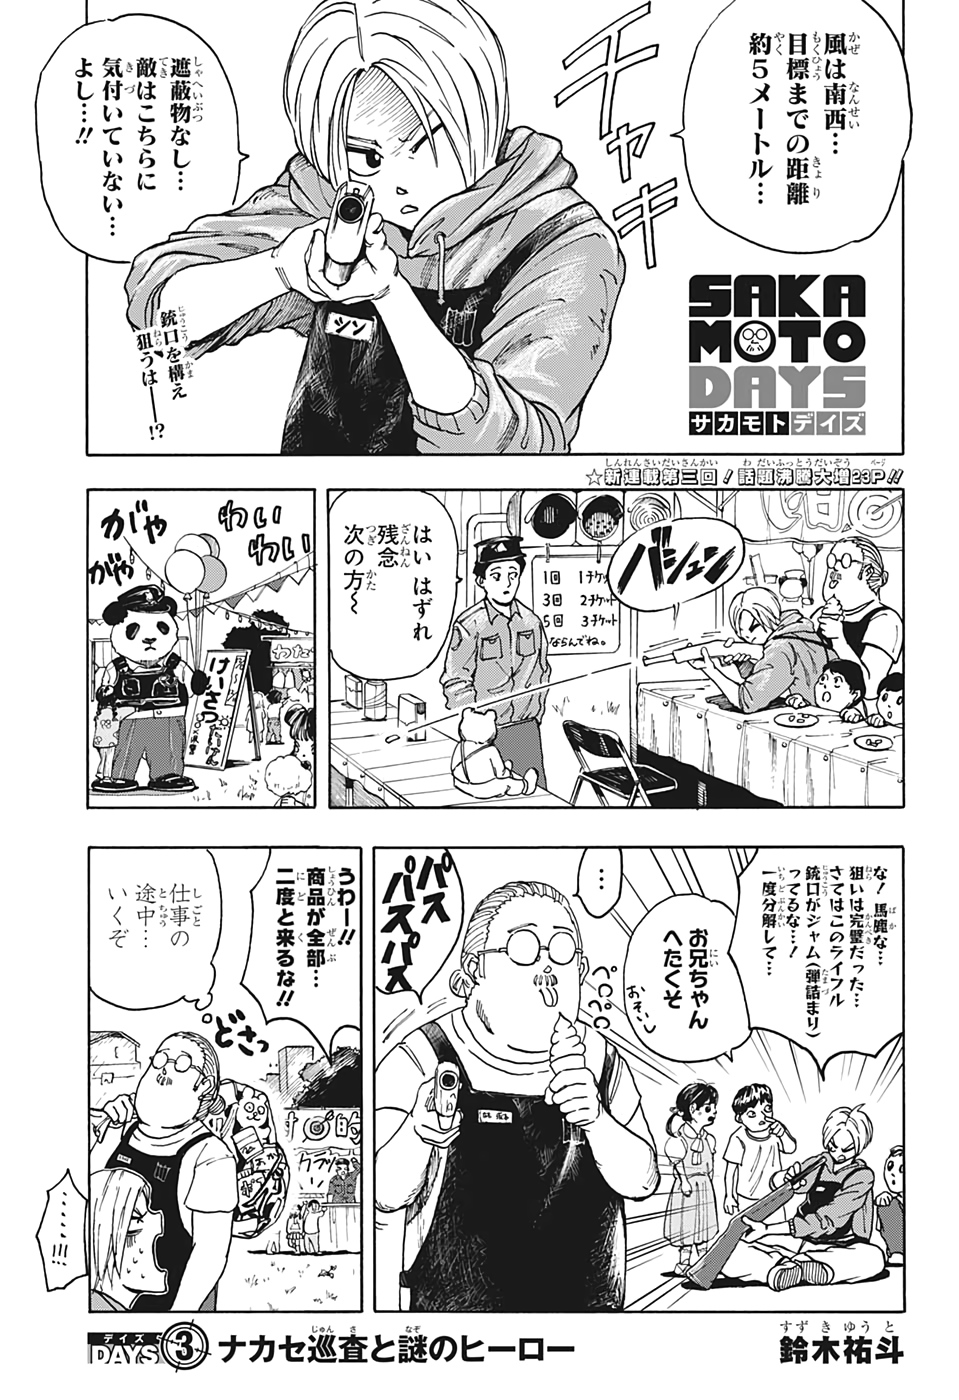 SAKAMOTO -サカモト- 第3話 - Page 1